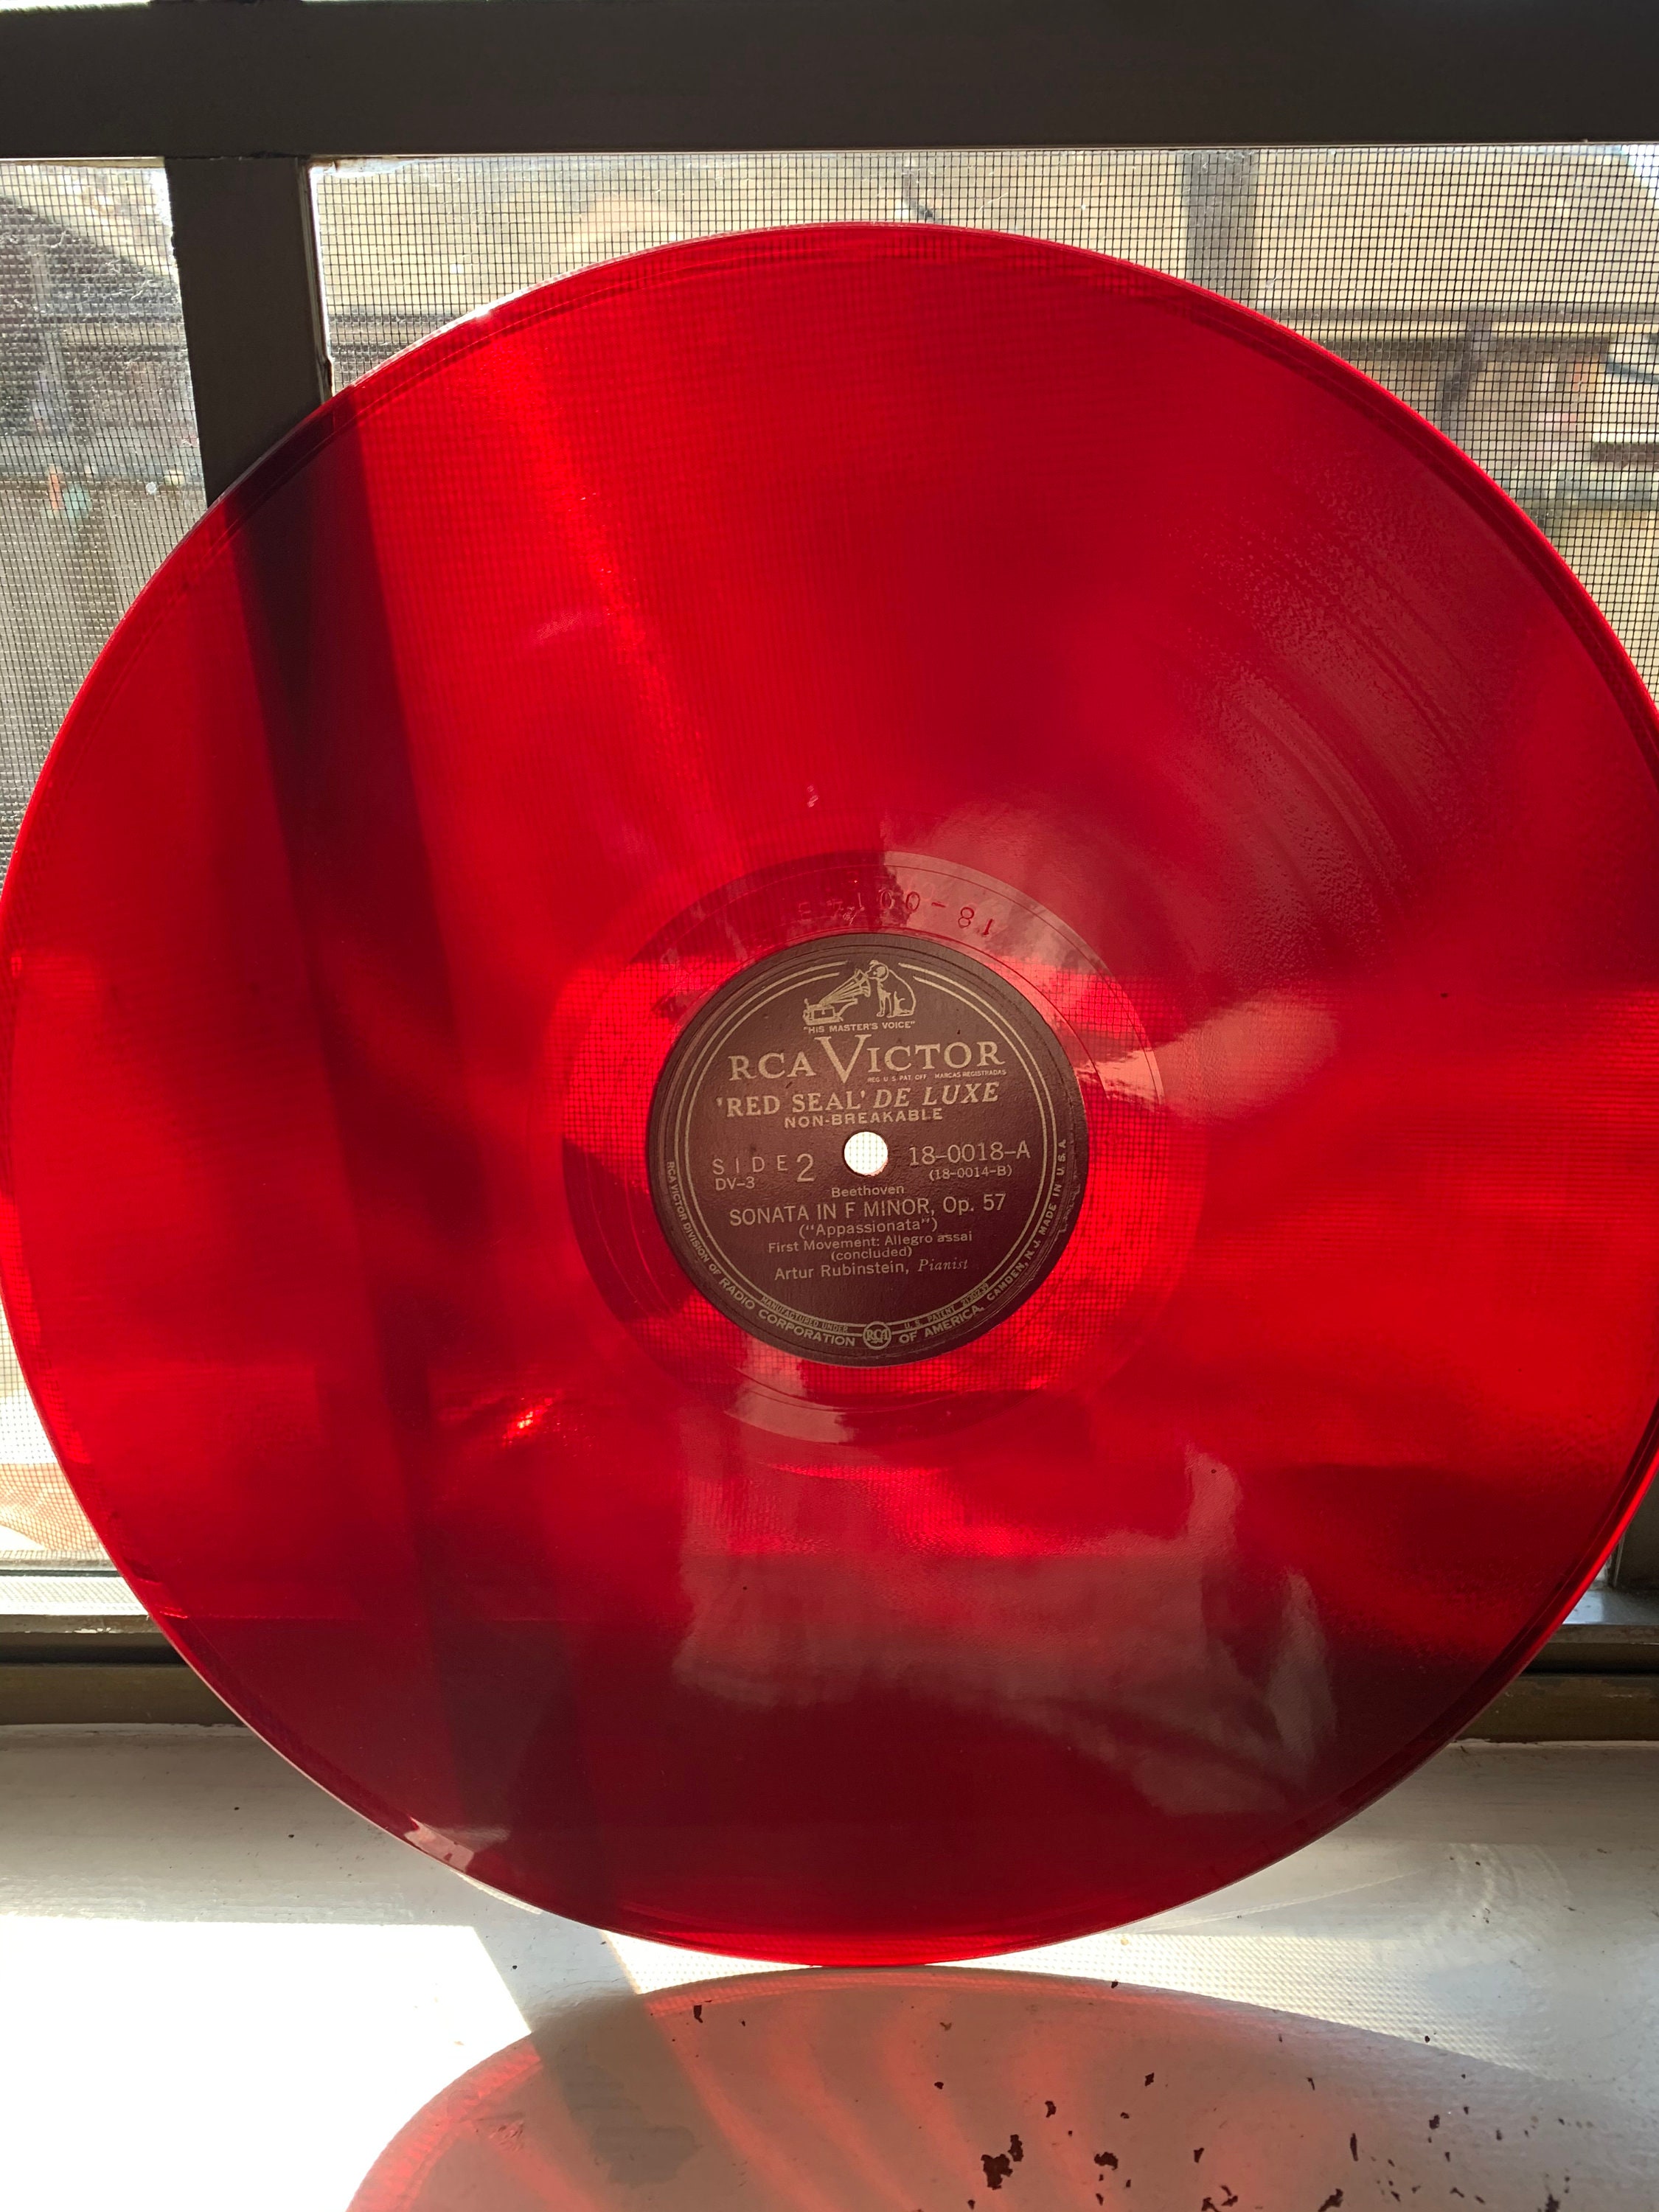 Kettcar - Sylt Red Marbled - Vinyl LP - 2008 - EU - Reissue